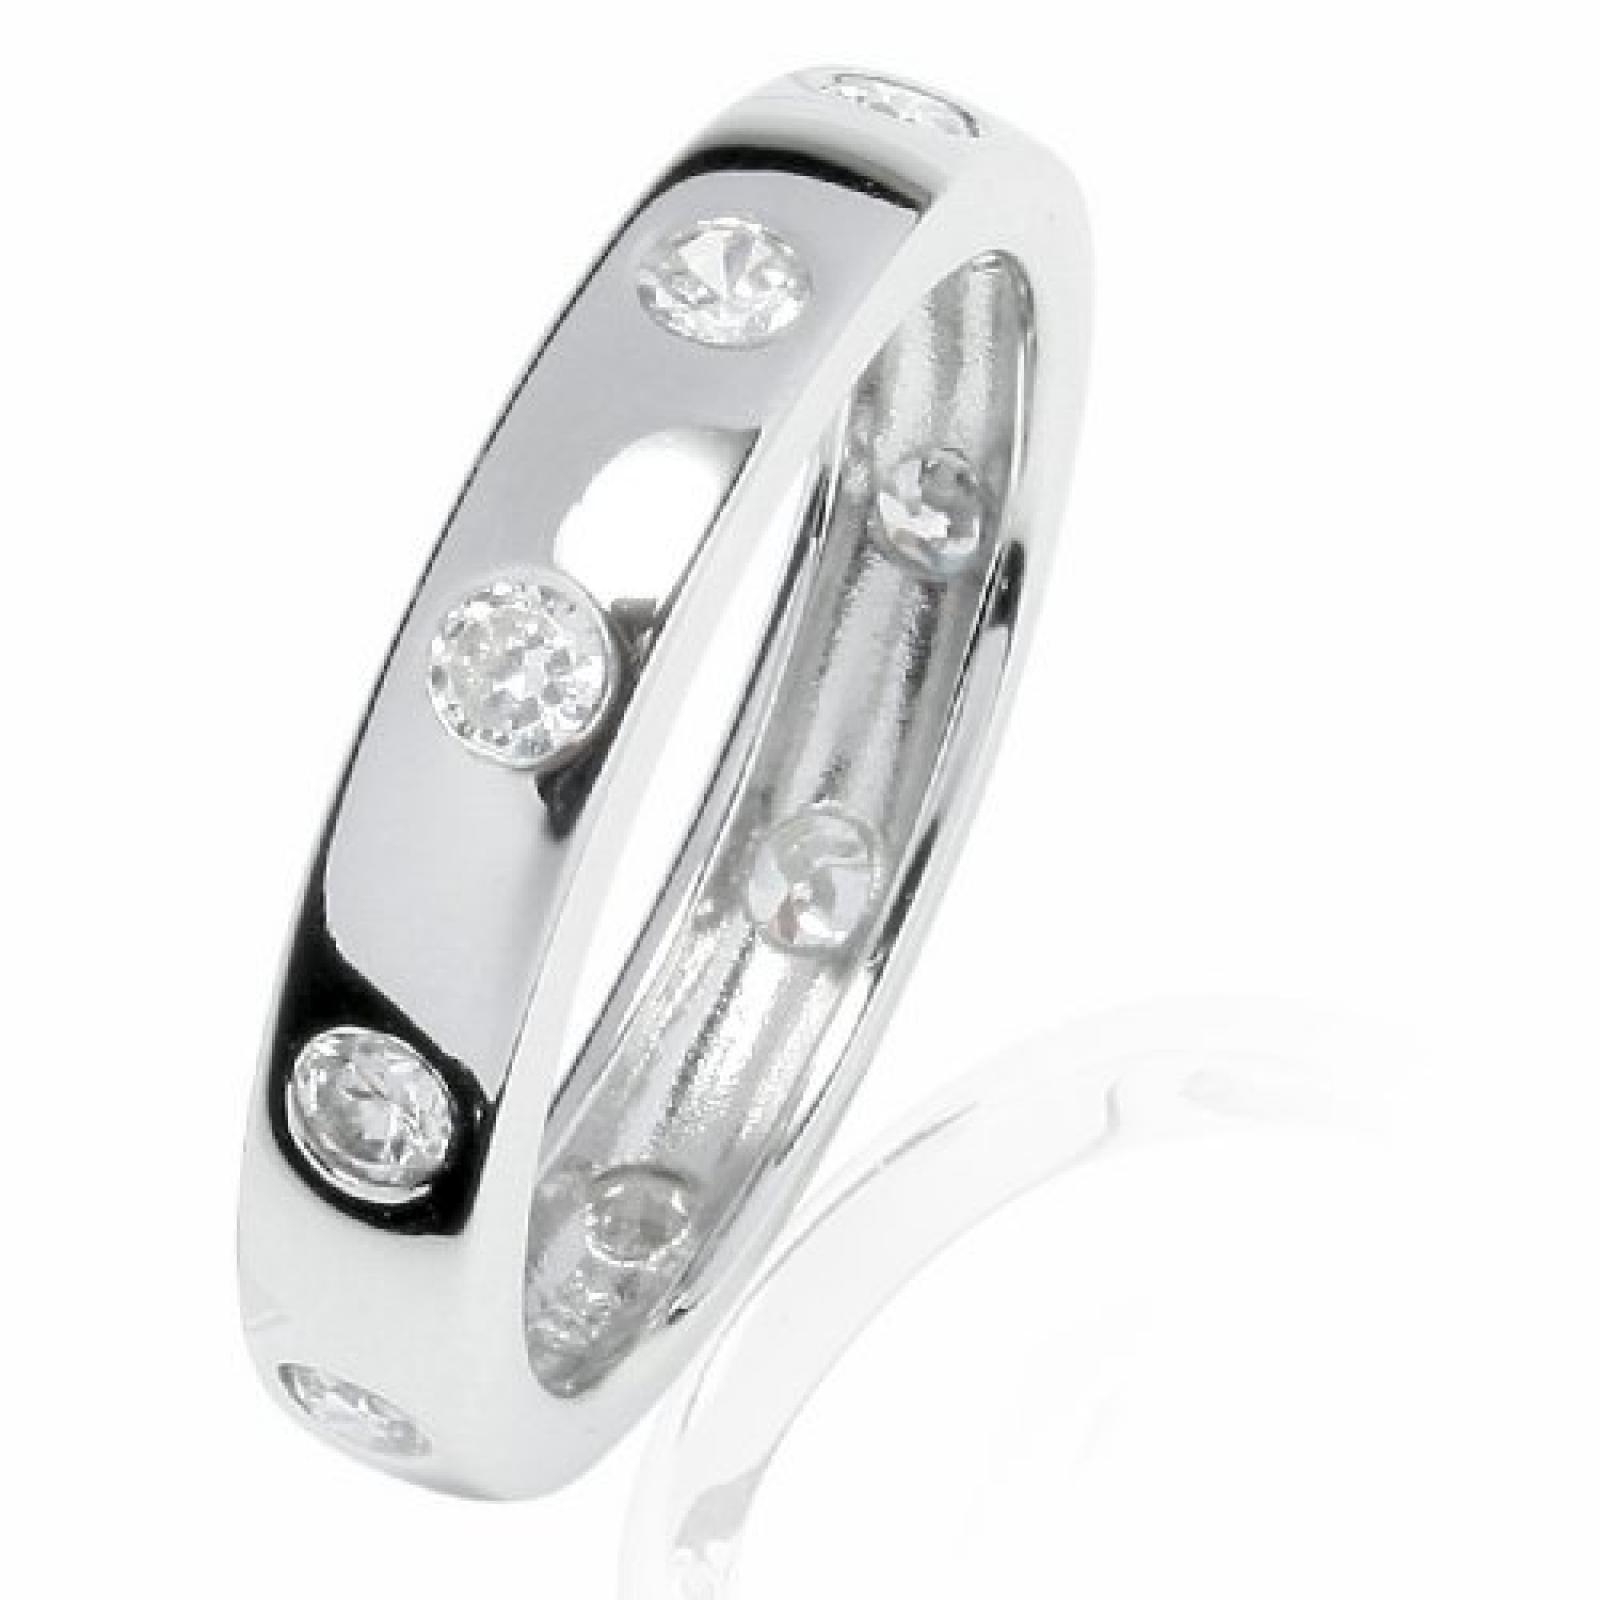 RAFAELA DONATA 925/- Sterling Silber rhodiniert Ring mit Zirkonia weiß 